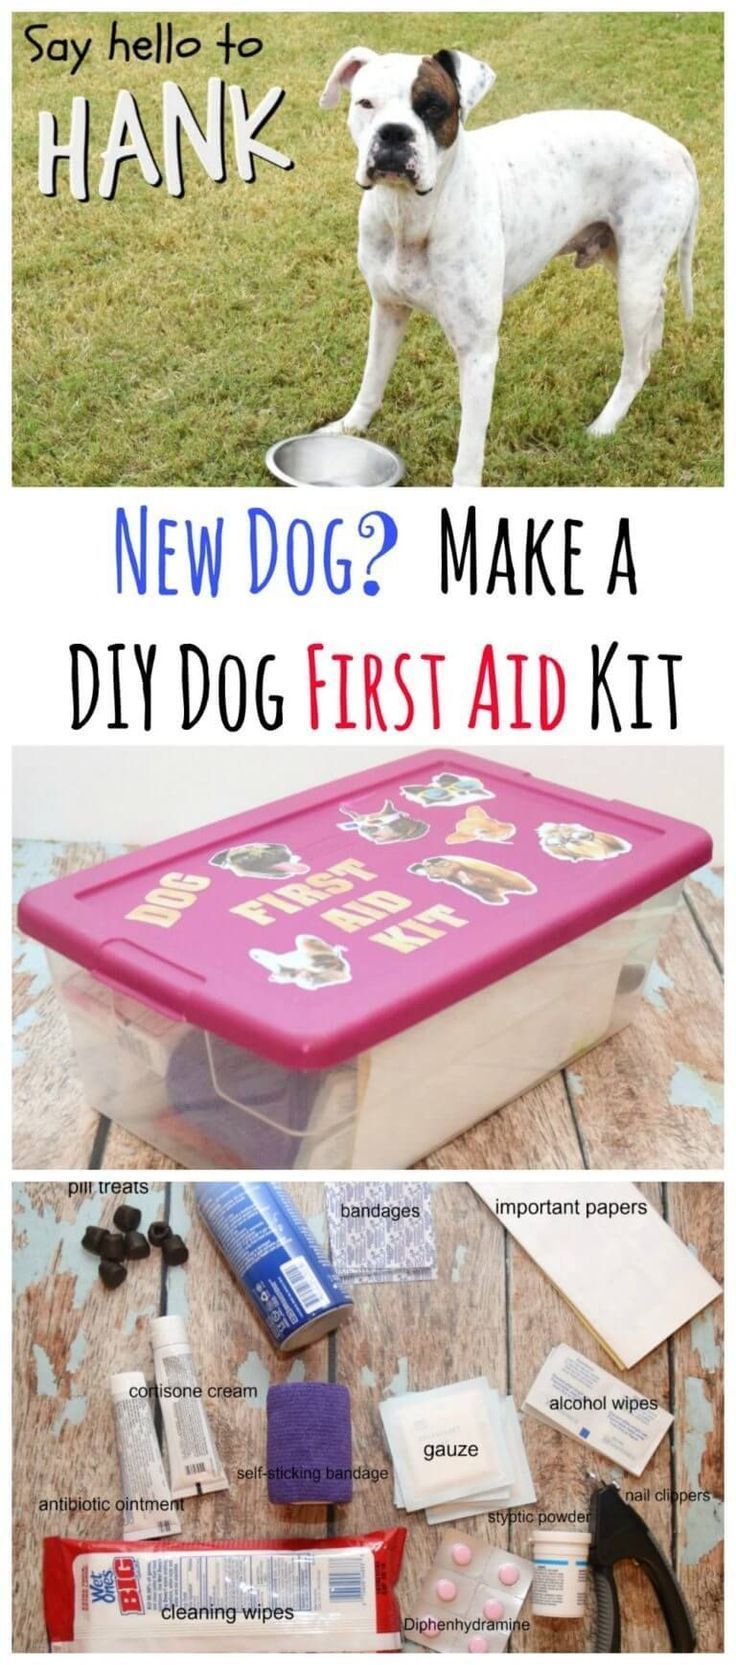 New Dog & DIY Dog First Aid Kit | The TipToe Fairy - New Dog & DIY Dog First Aid Kit | The TipToe Fairy -   17 diy Dog training ideas